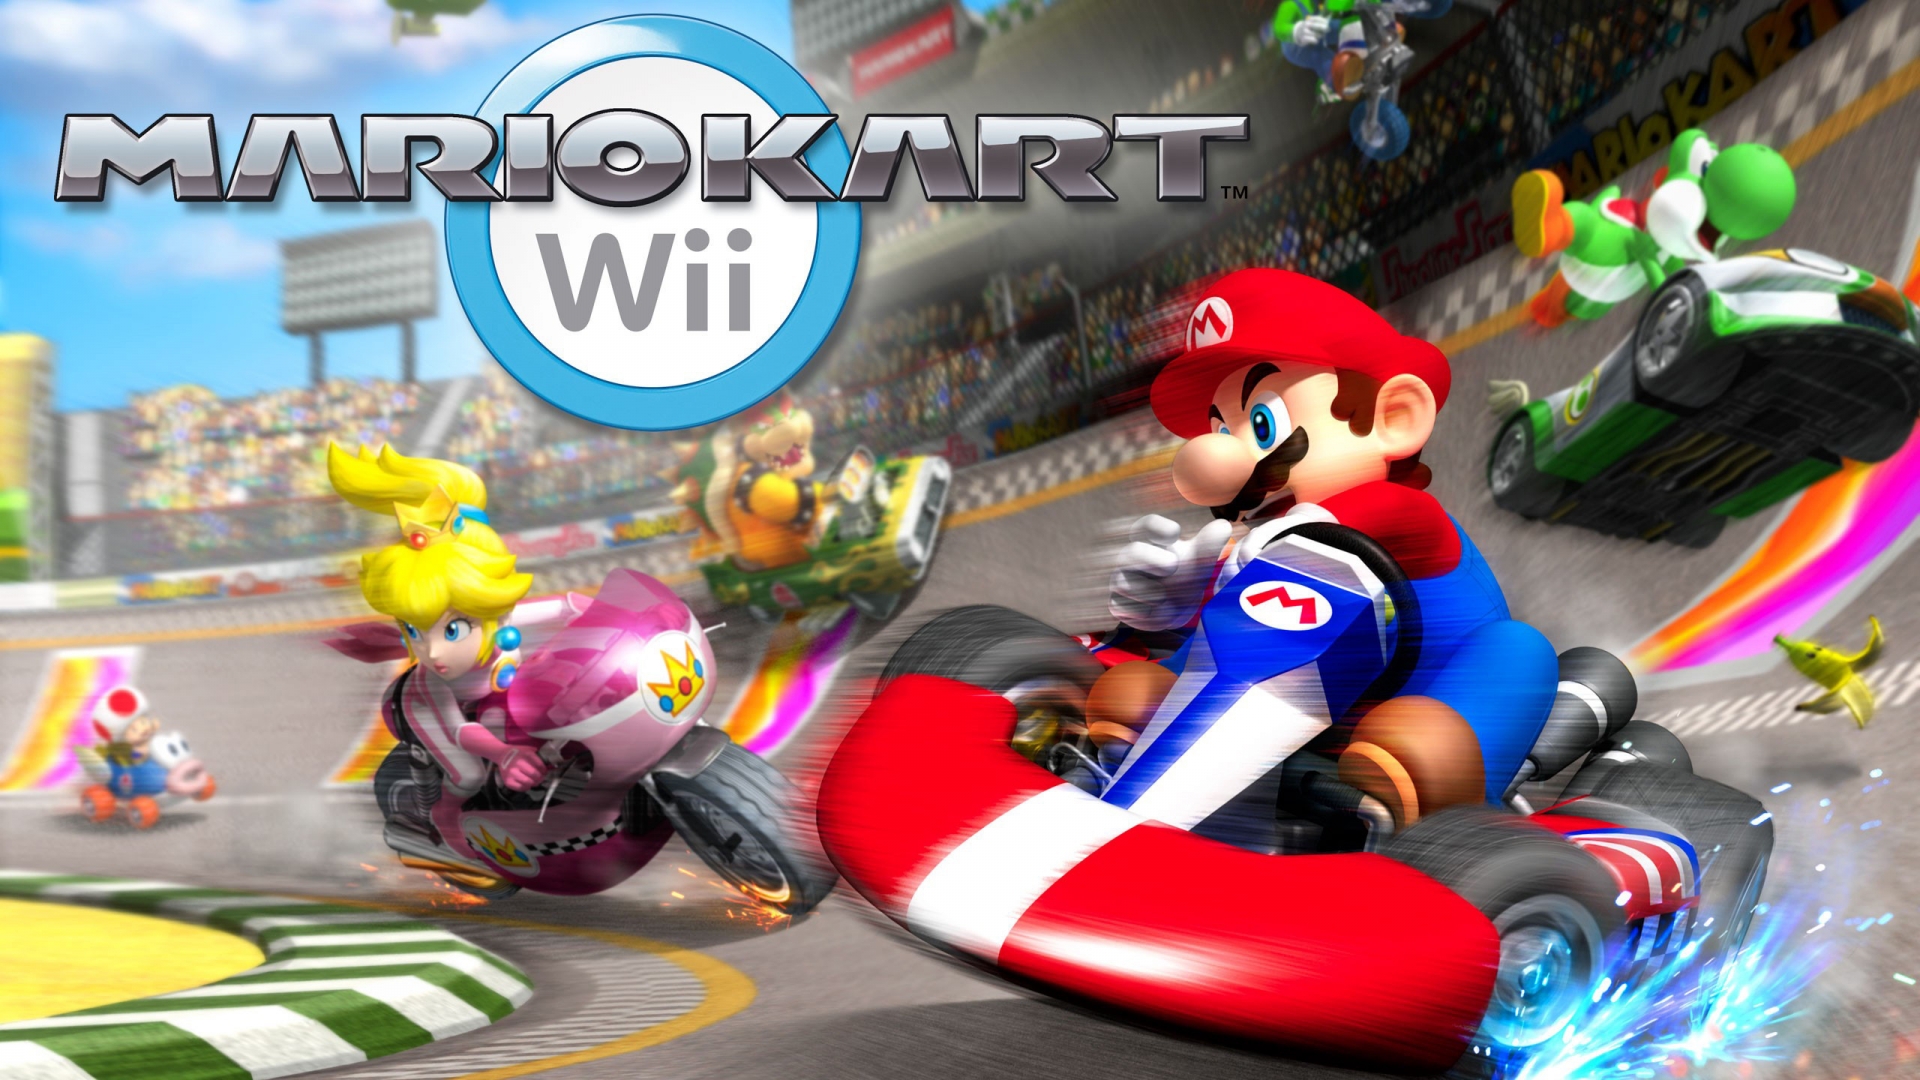 Mario Kart Wii for 1920 x 1080 HDTV 1080p resolution